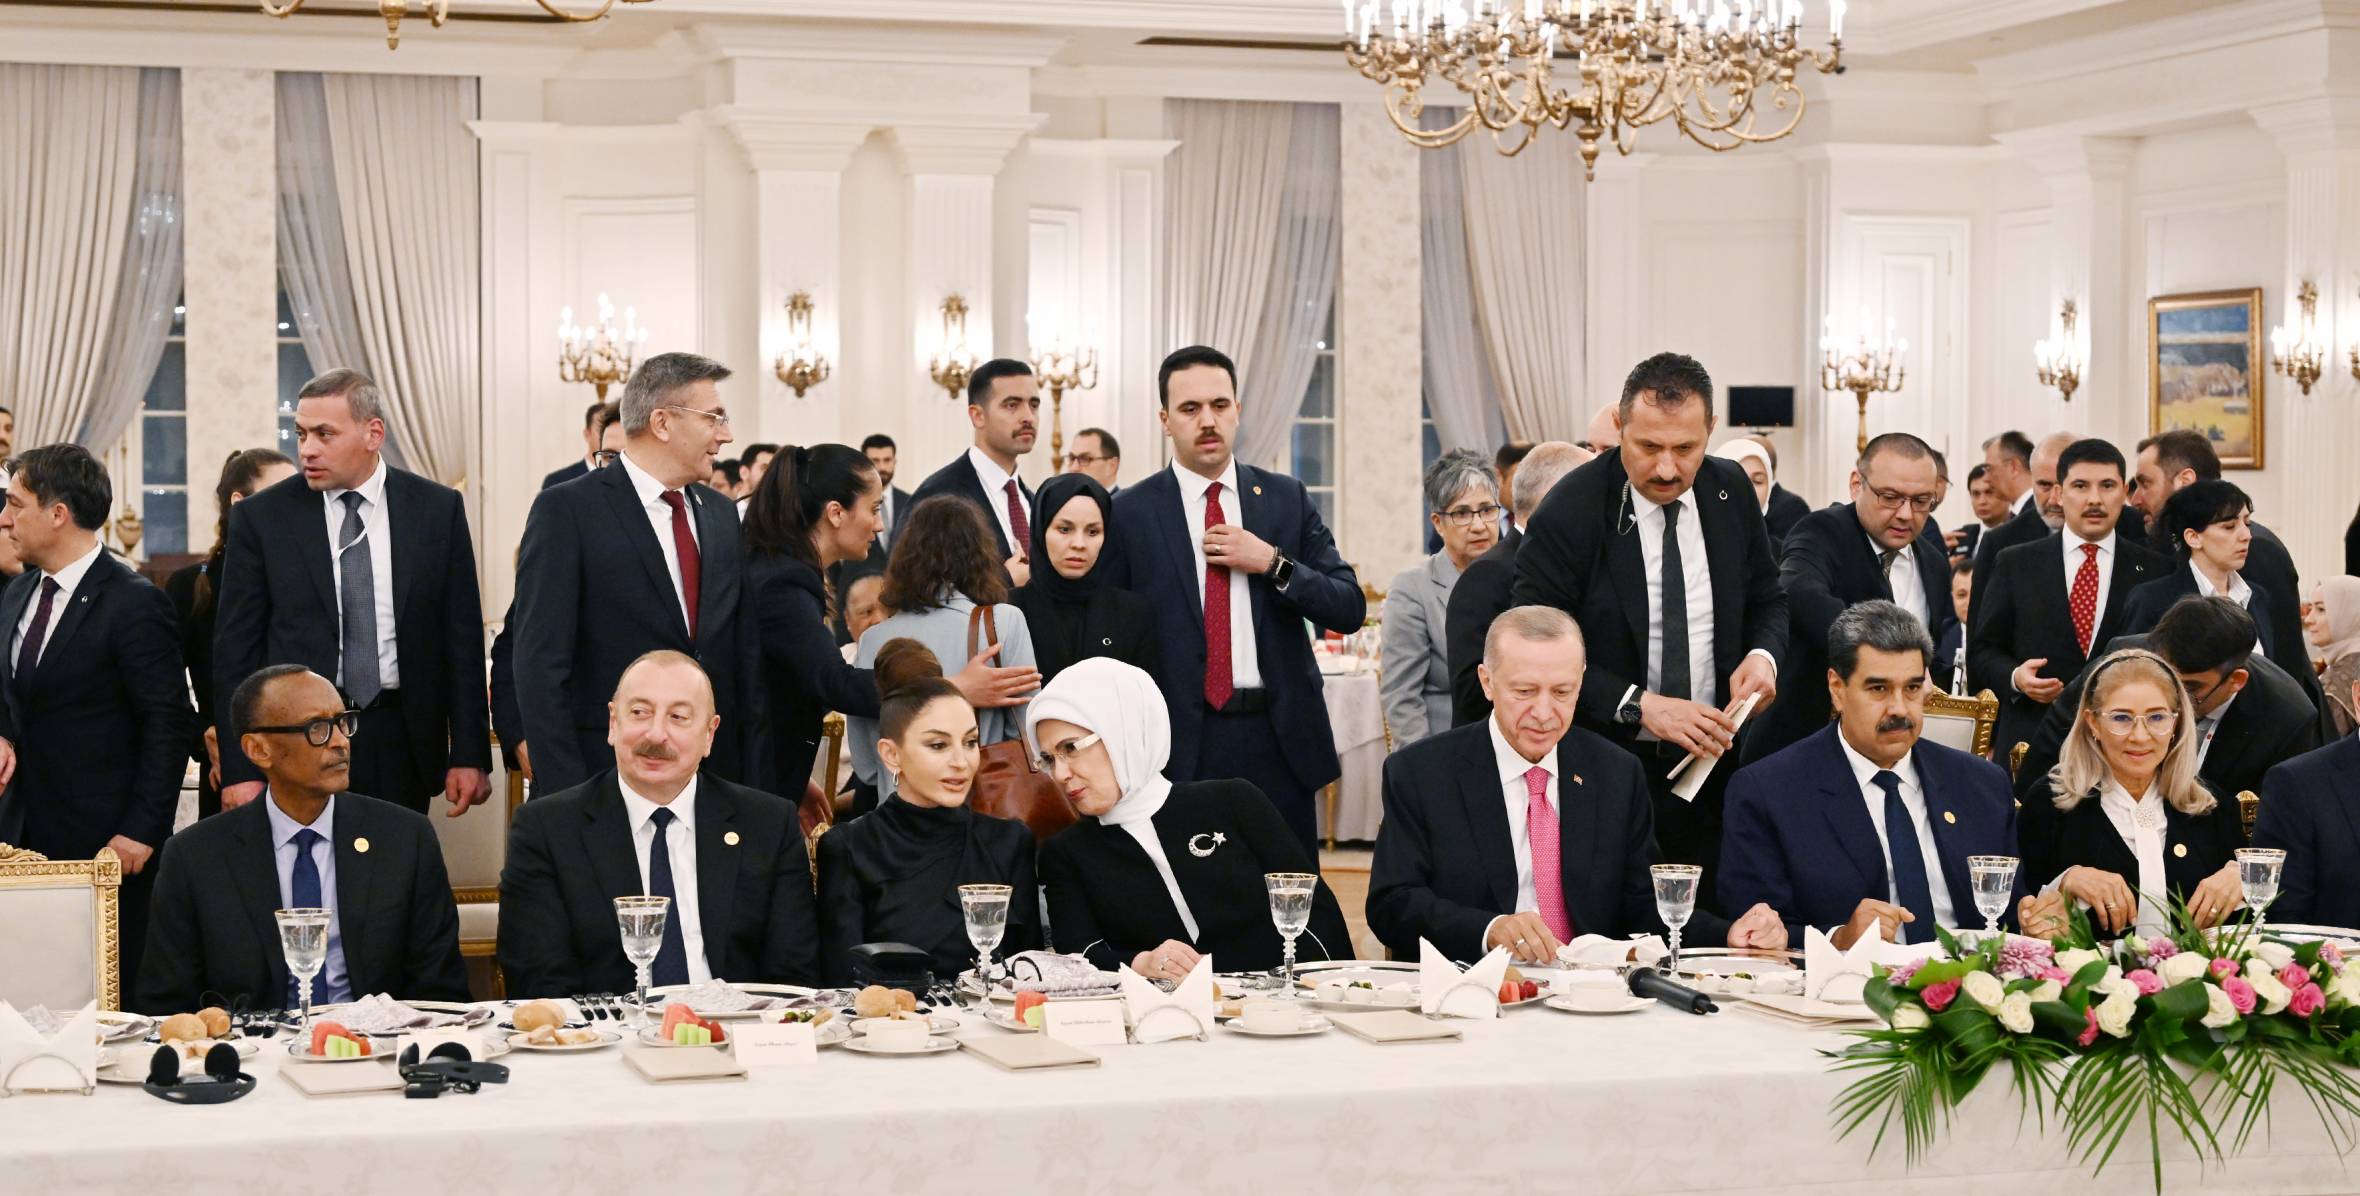 Ilham Aliyev, First Lady Mehriban Aliyeva attend dinner hosted on behalf of Recep Tayyip Erdogan in Ankara